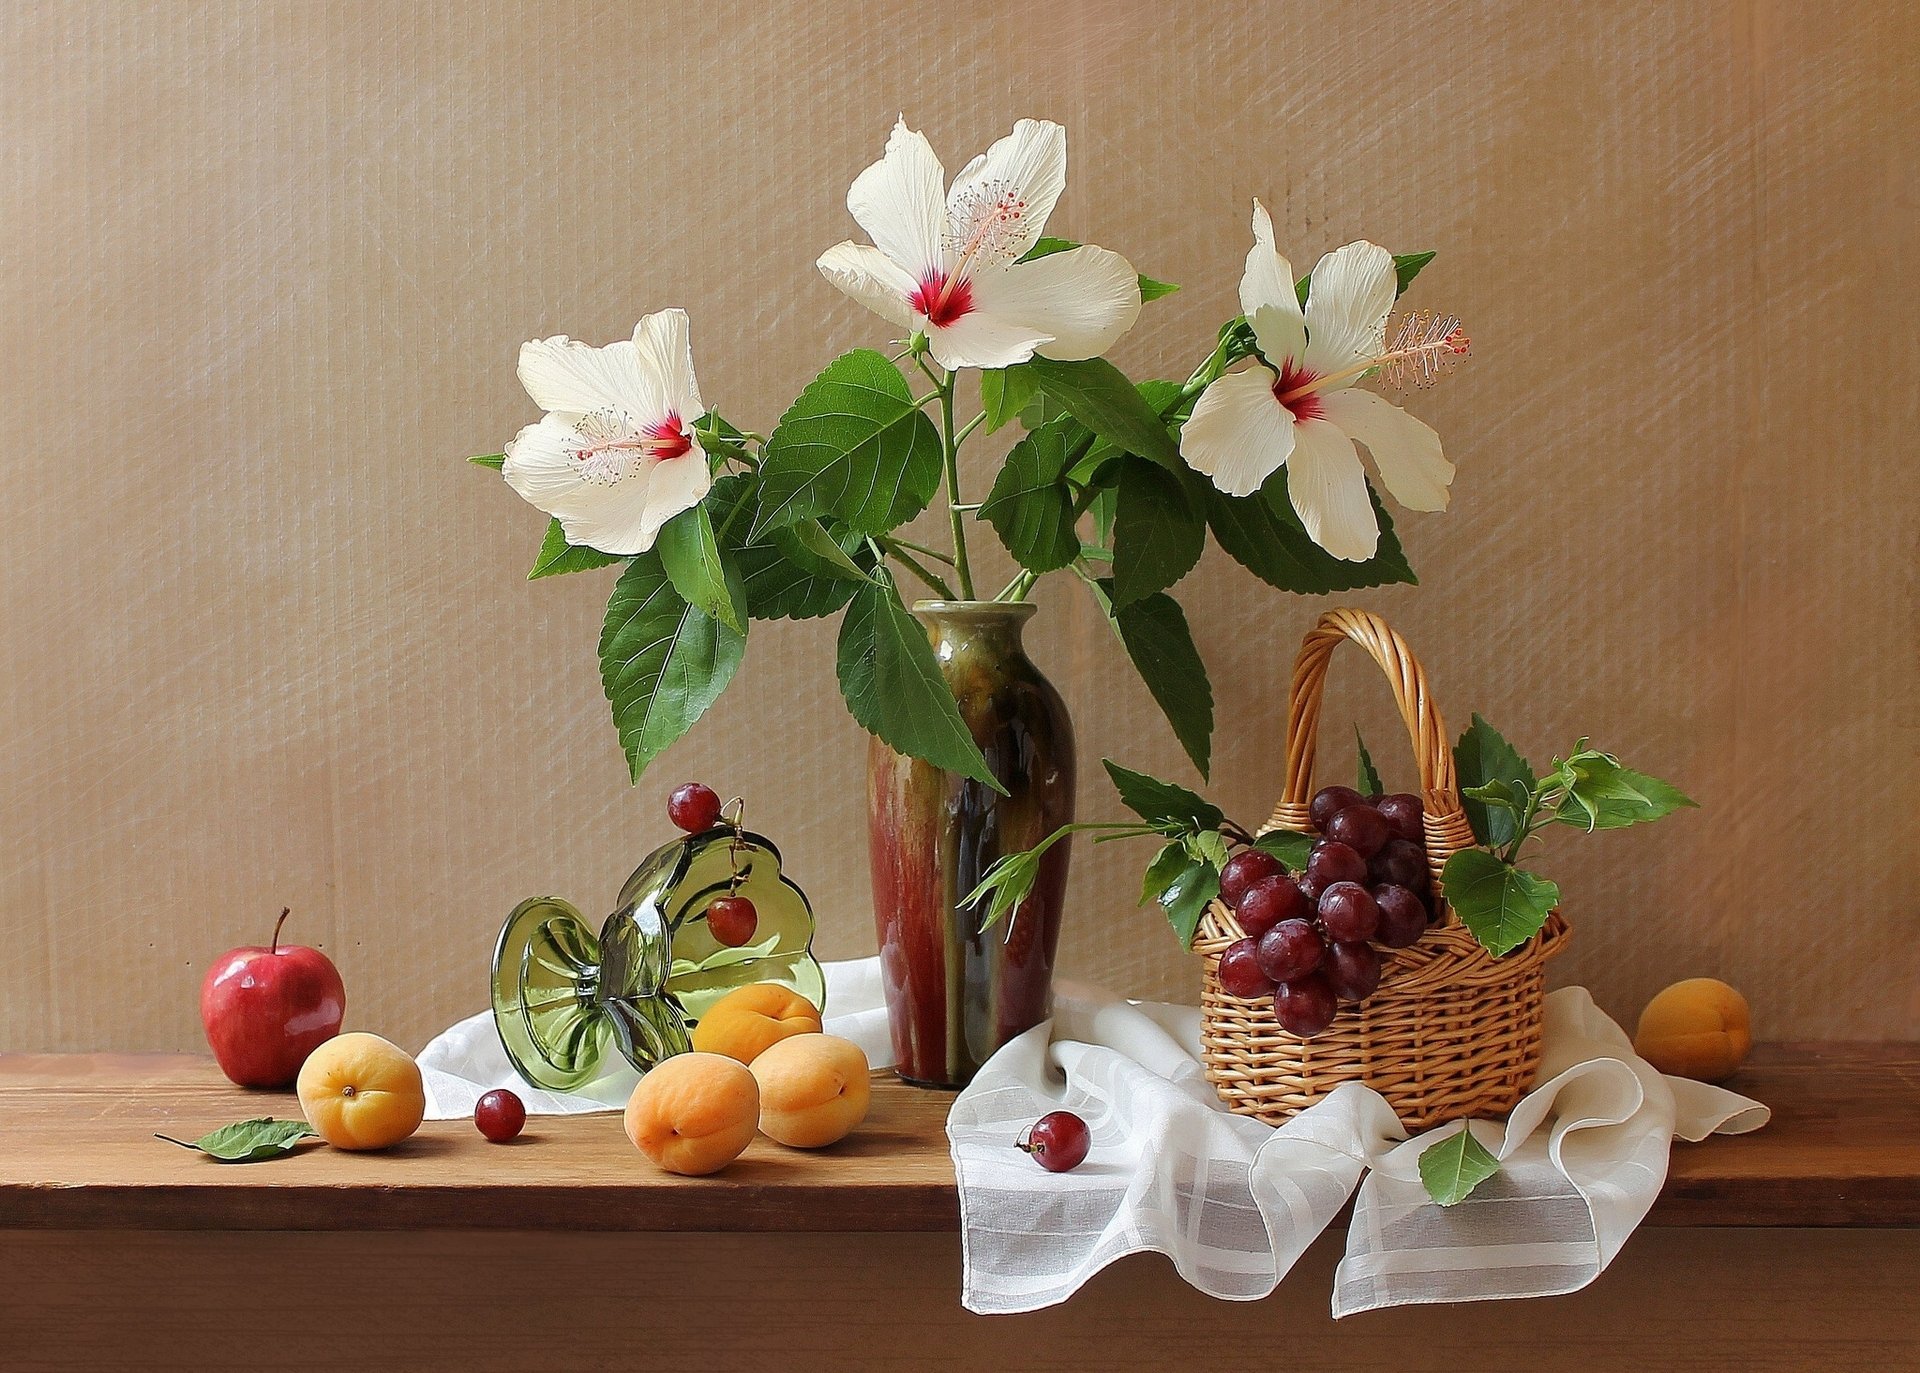 абрикосы виноград яблоко цветы гибискус корзинка ваза натюрморт